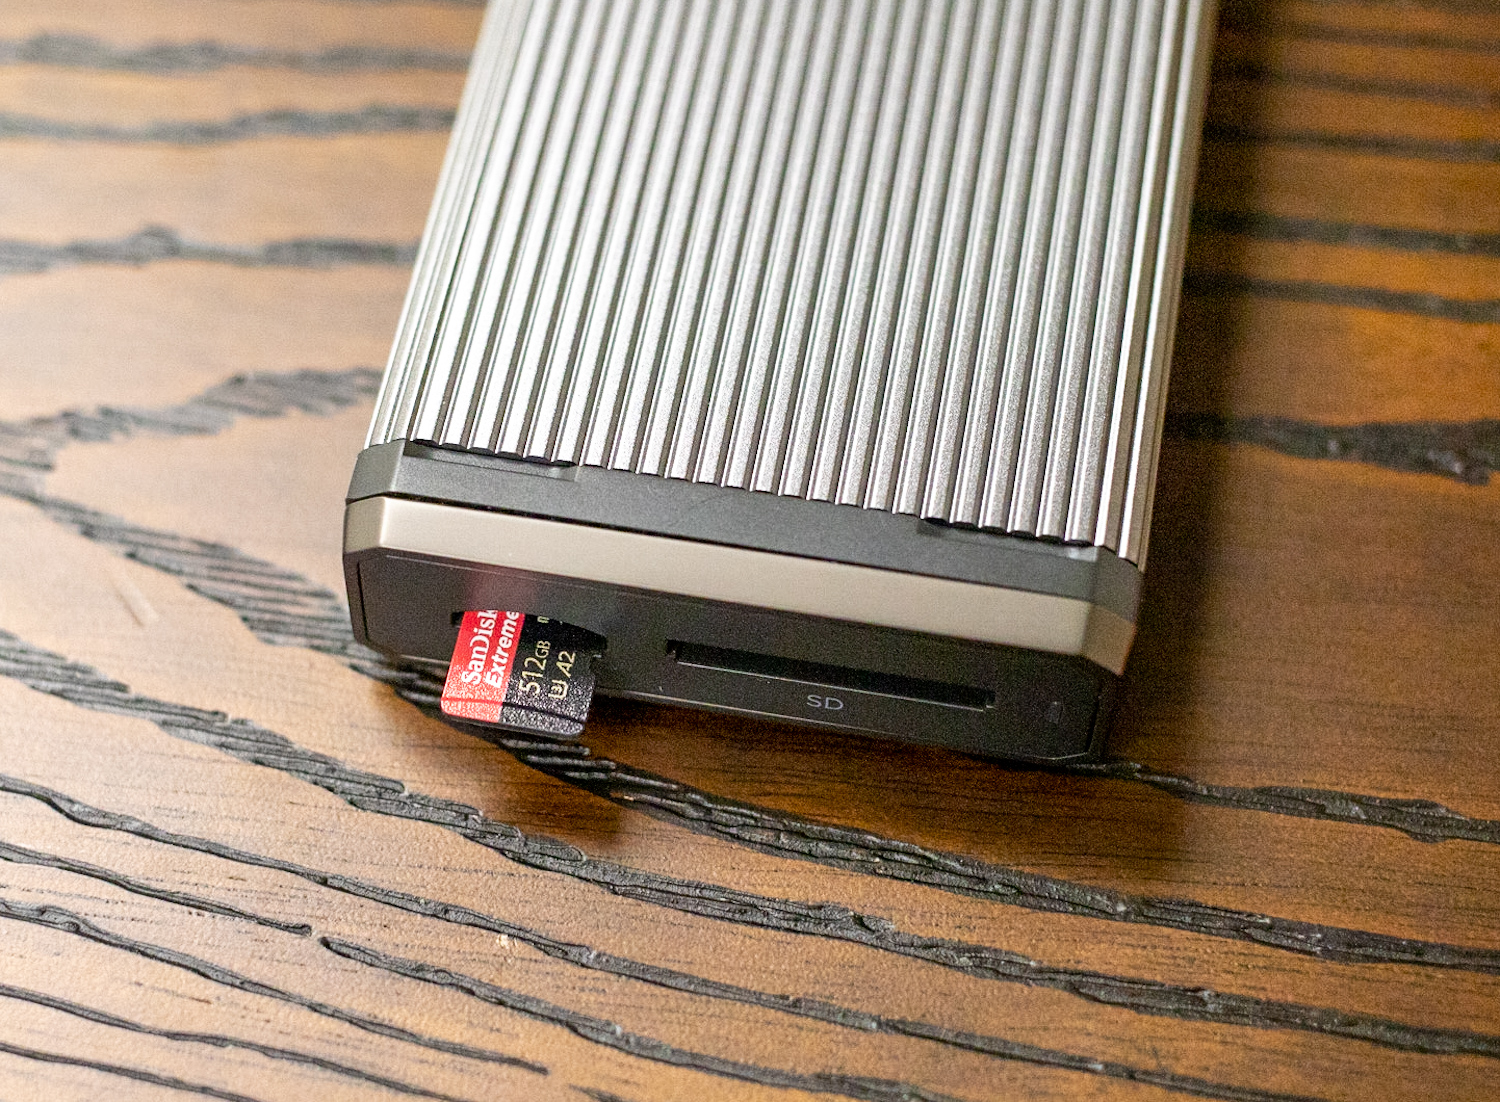 SanDisk 1TB Extreme Pro microSDXC UHS-I Memory Card - SDSQXCD-1T00